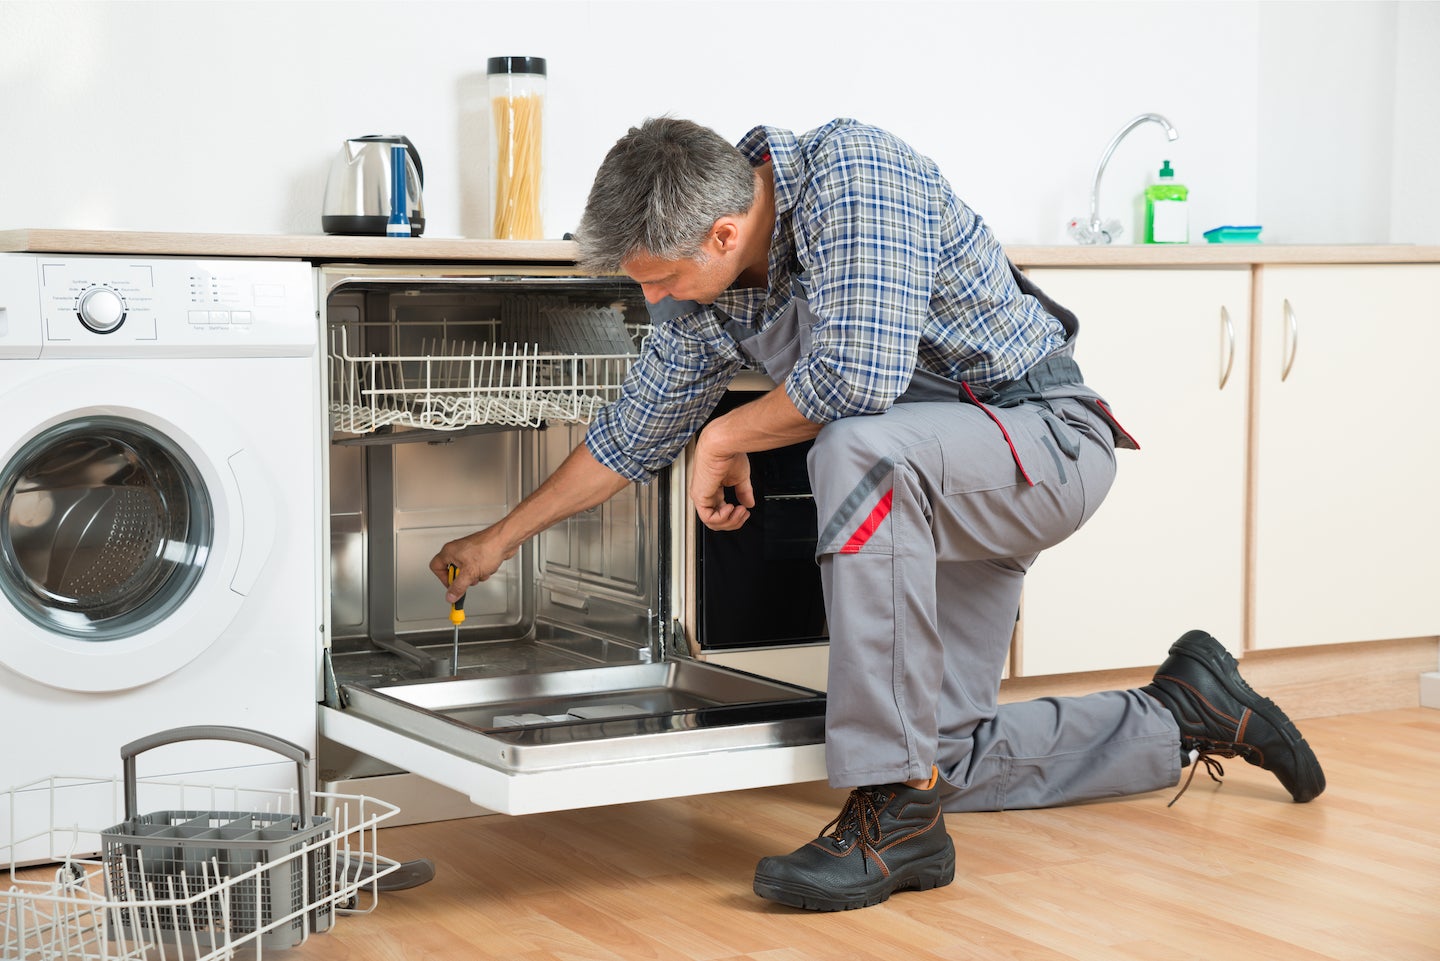 Repairman reviews dishwasher repairs with Miami couple.